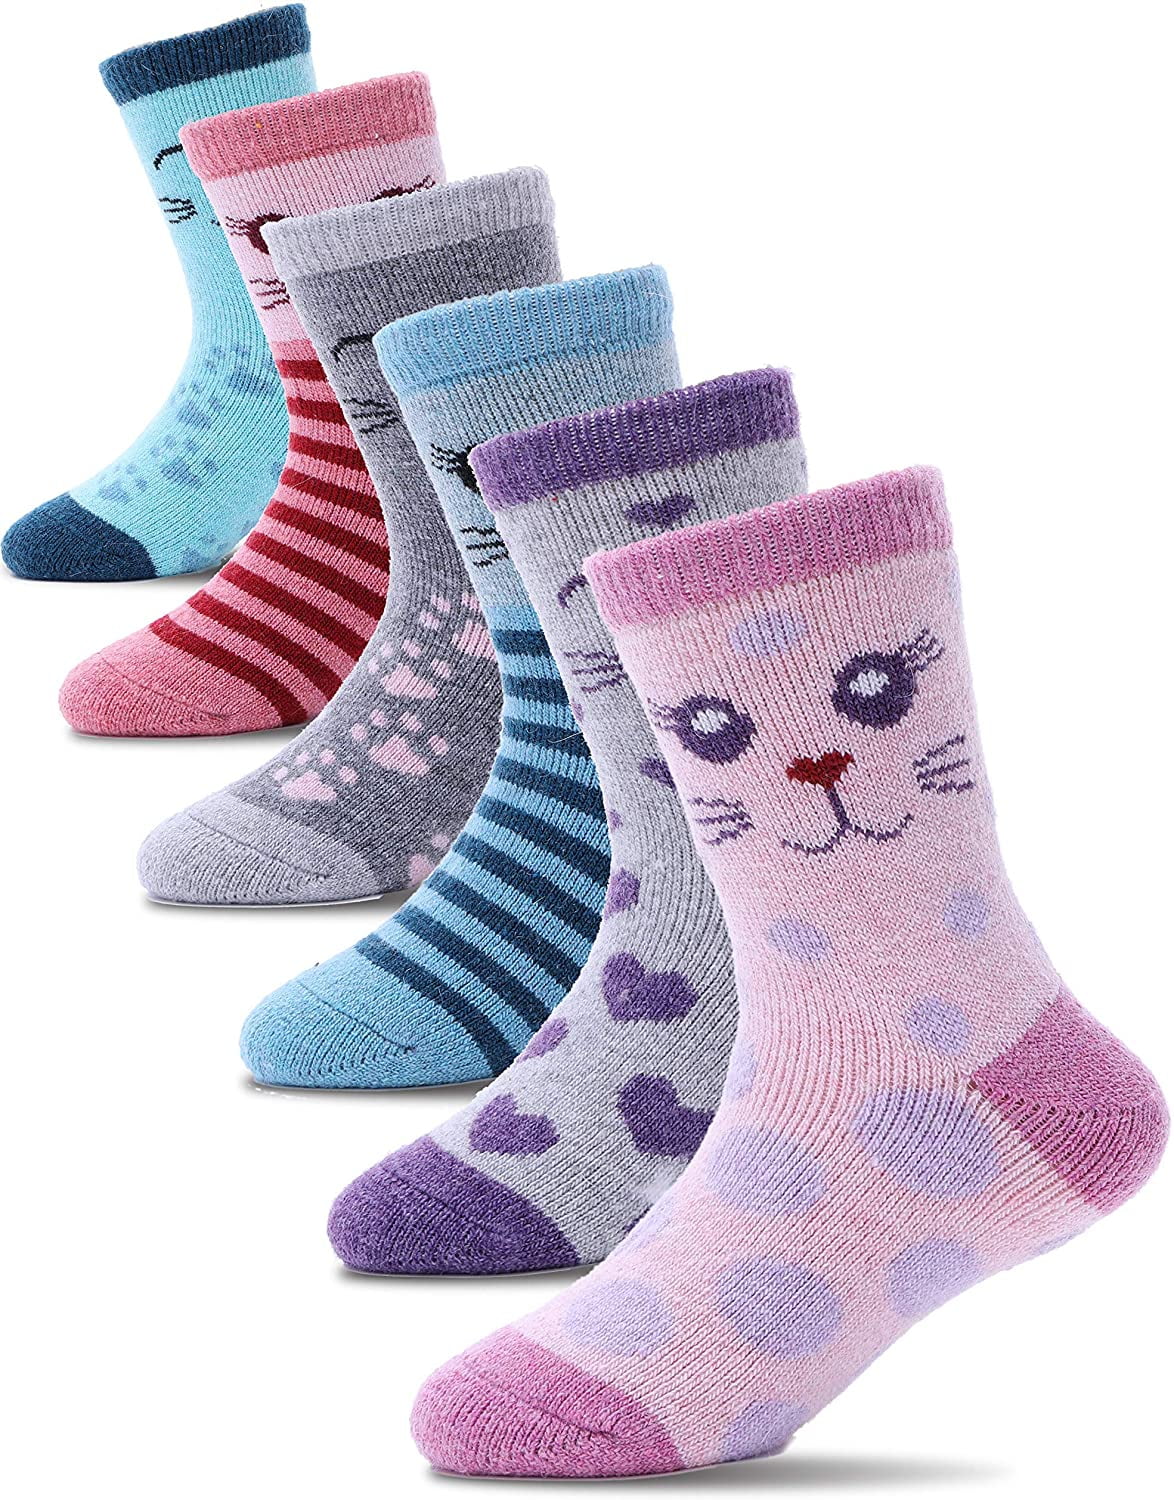 Boys Warm Cotton Socks Kids Winter Thick Crew Socks Thermal Cozy Socks for Boys 6 Pack